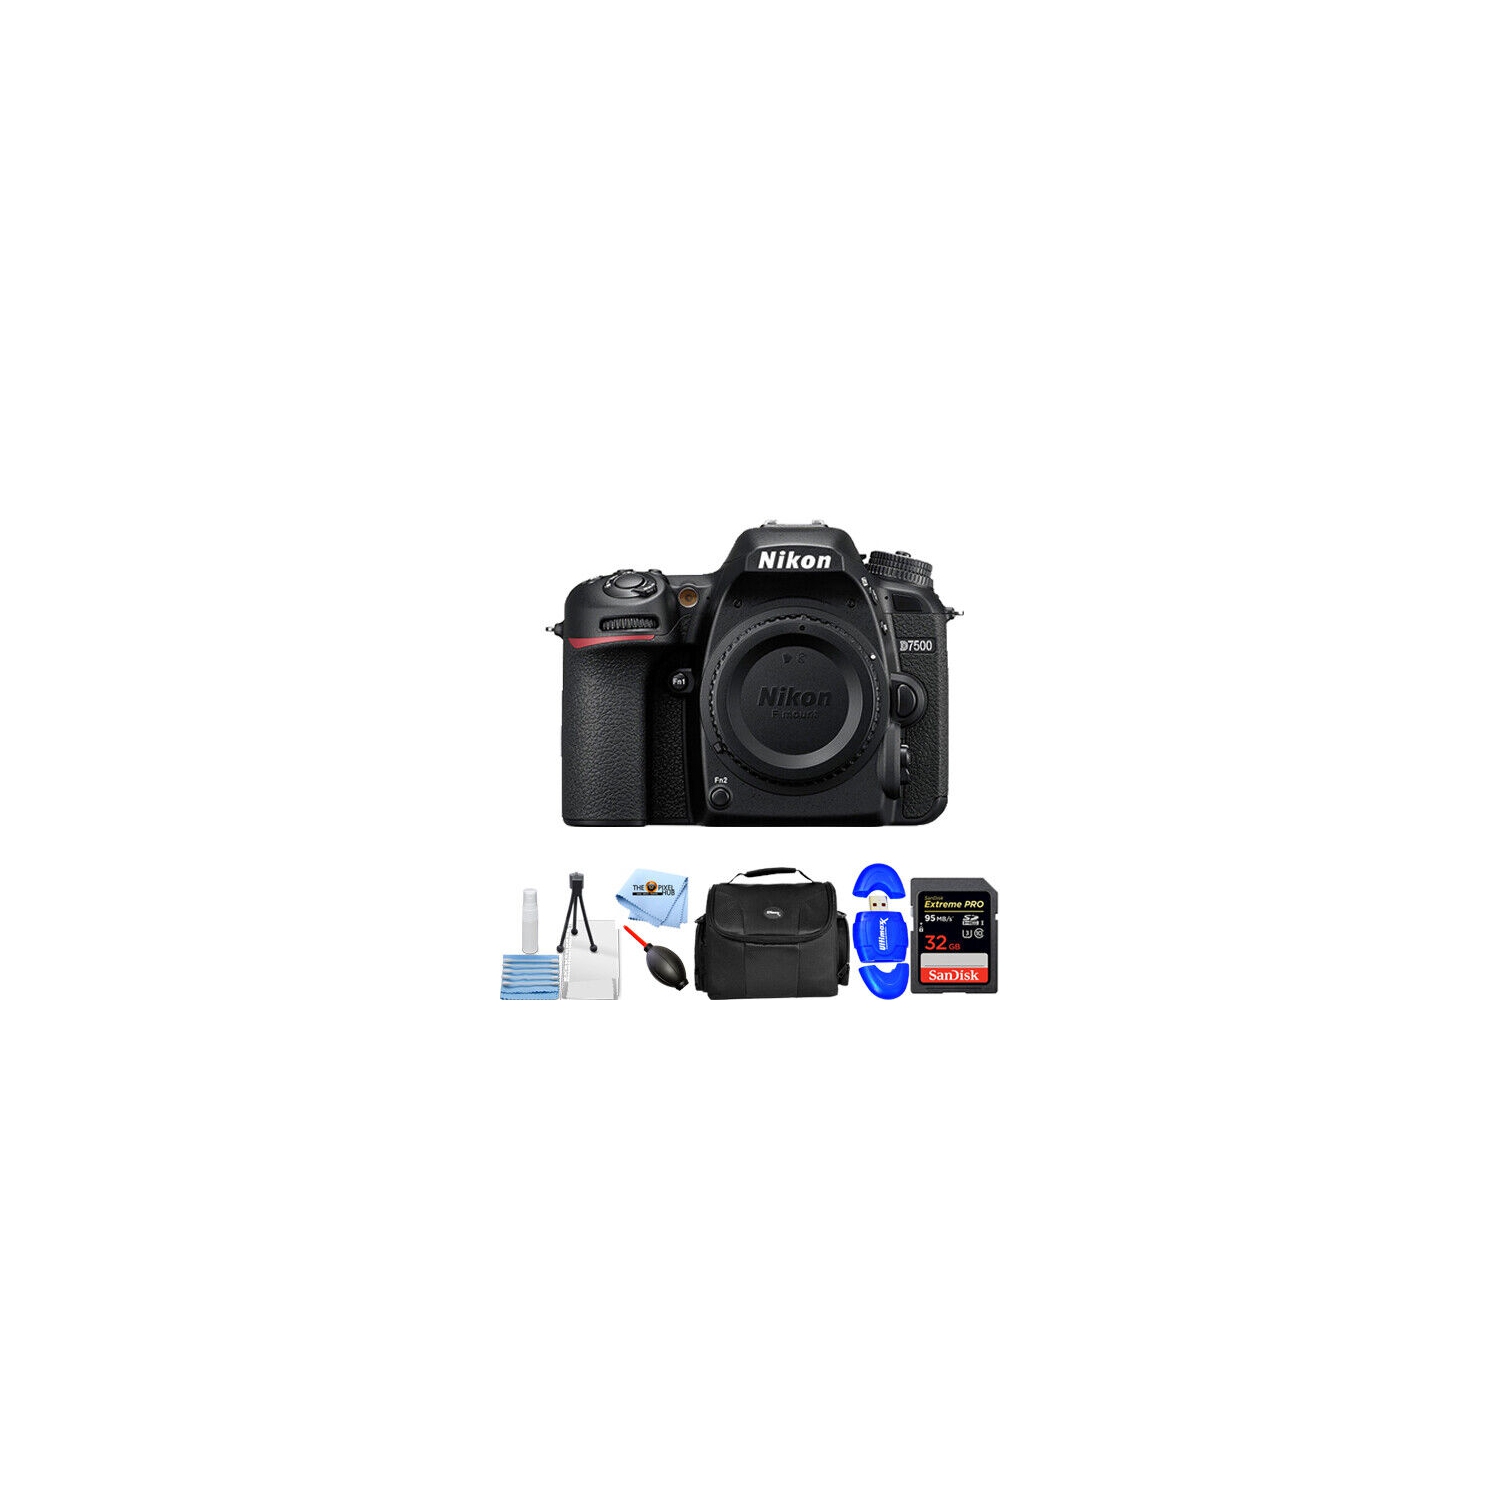 Nikon D7500 DSLR Camera (Body Only) 1581 - 7PC Accessory Bundle